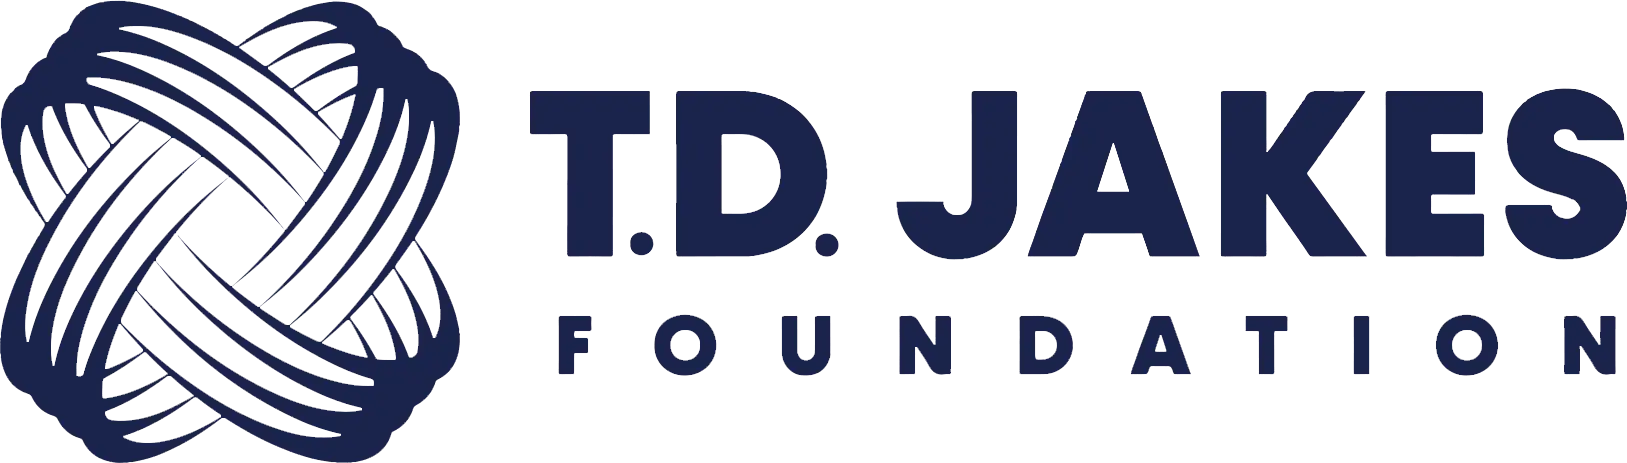 TD Jakes Foundation logo B2B Review